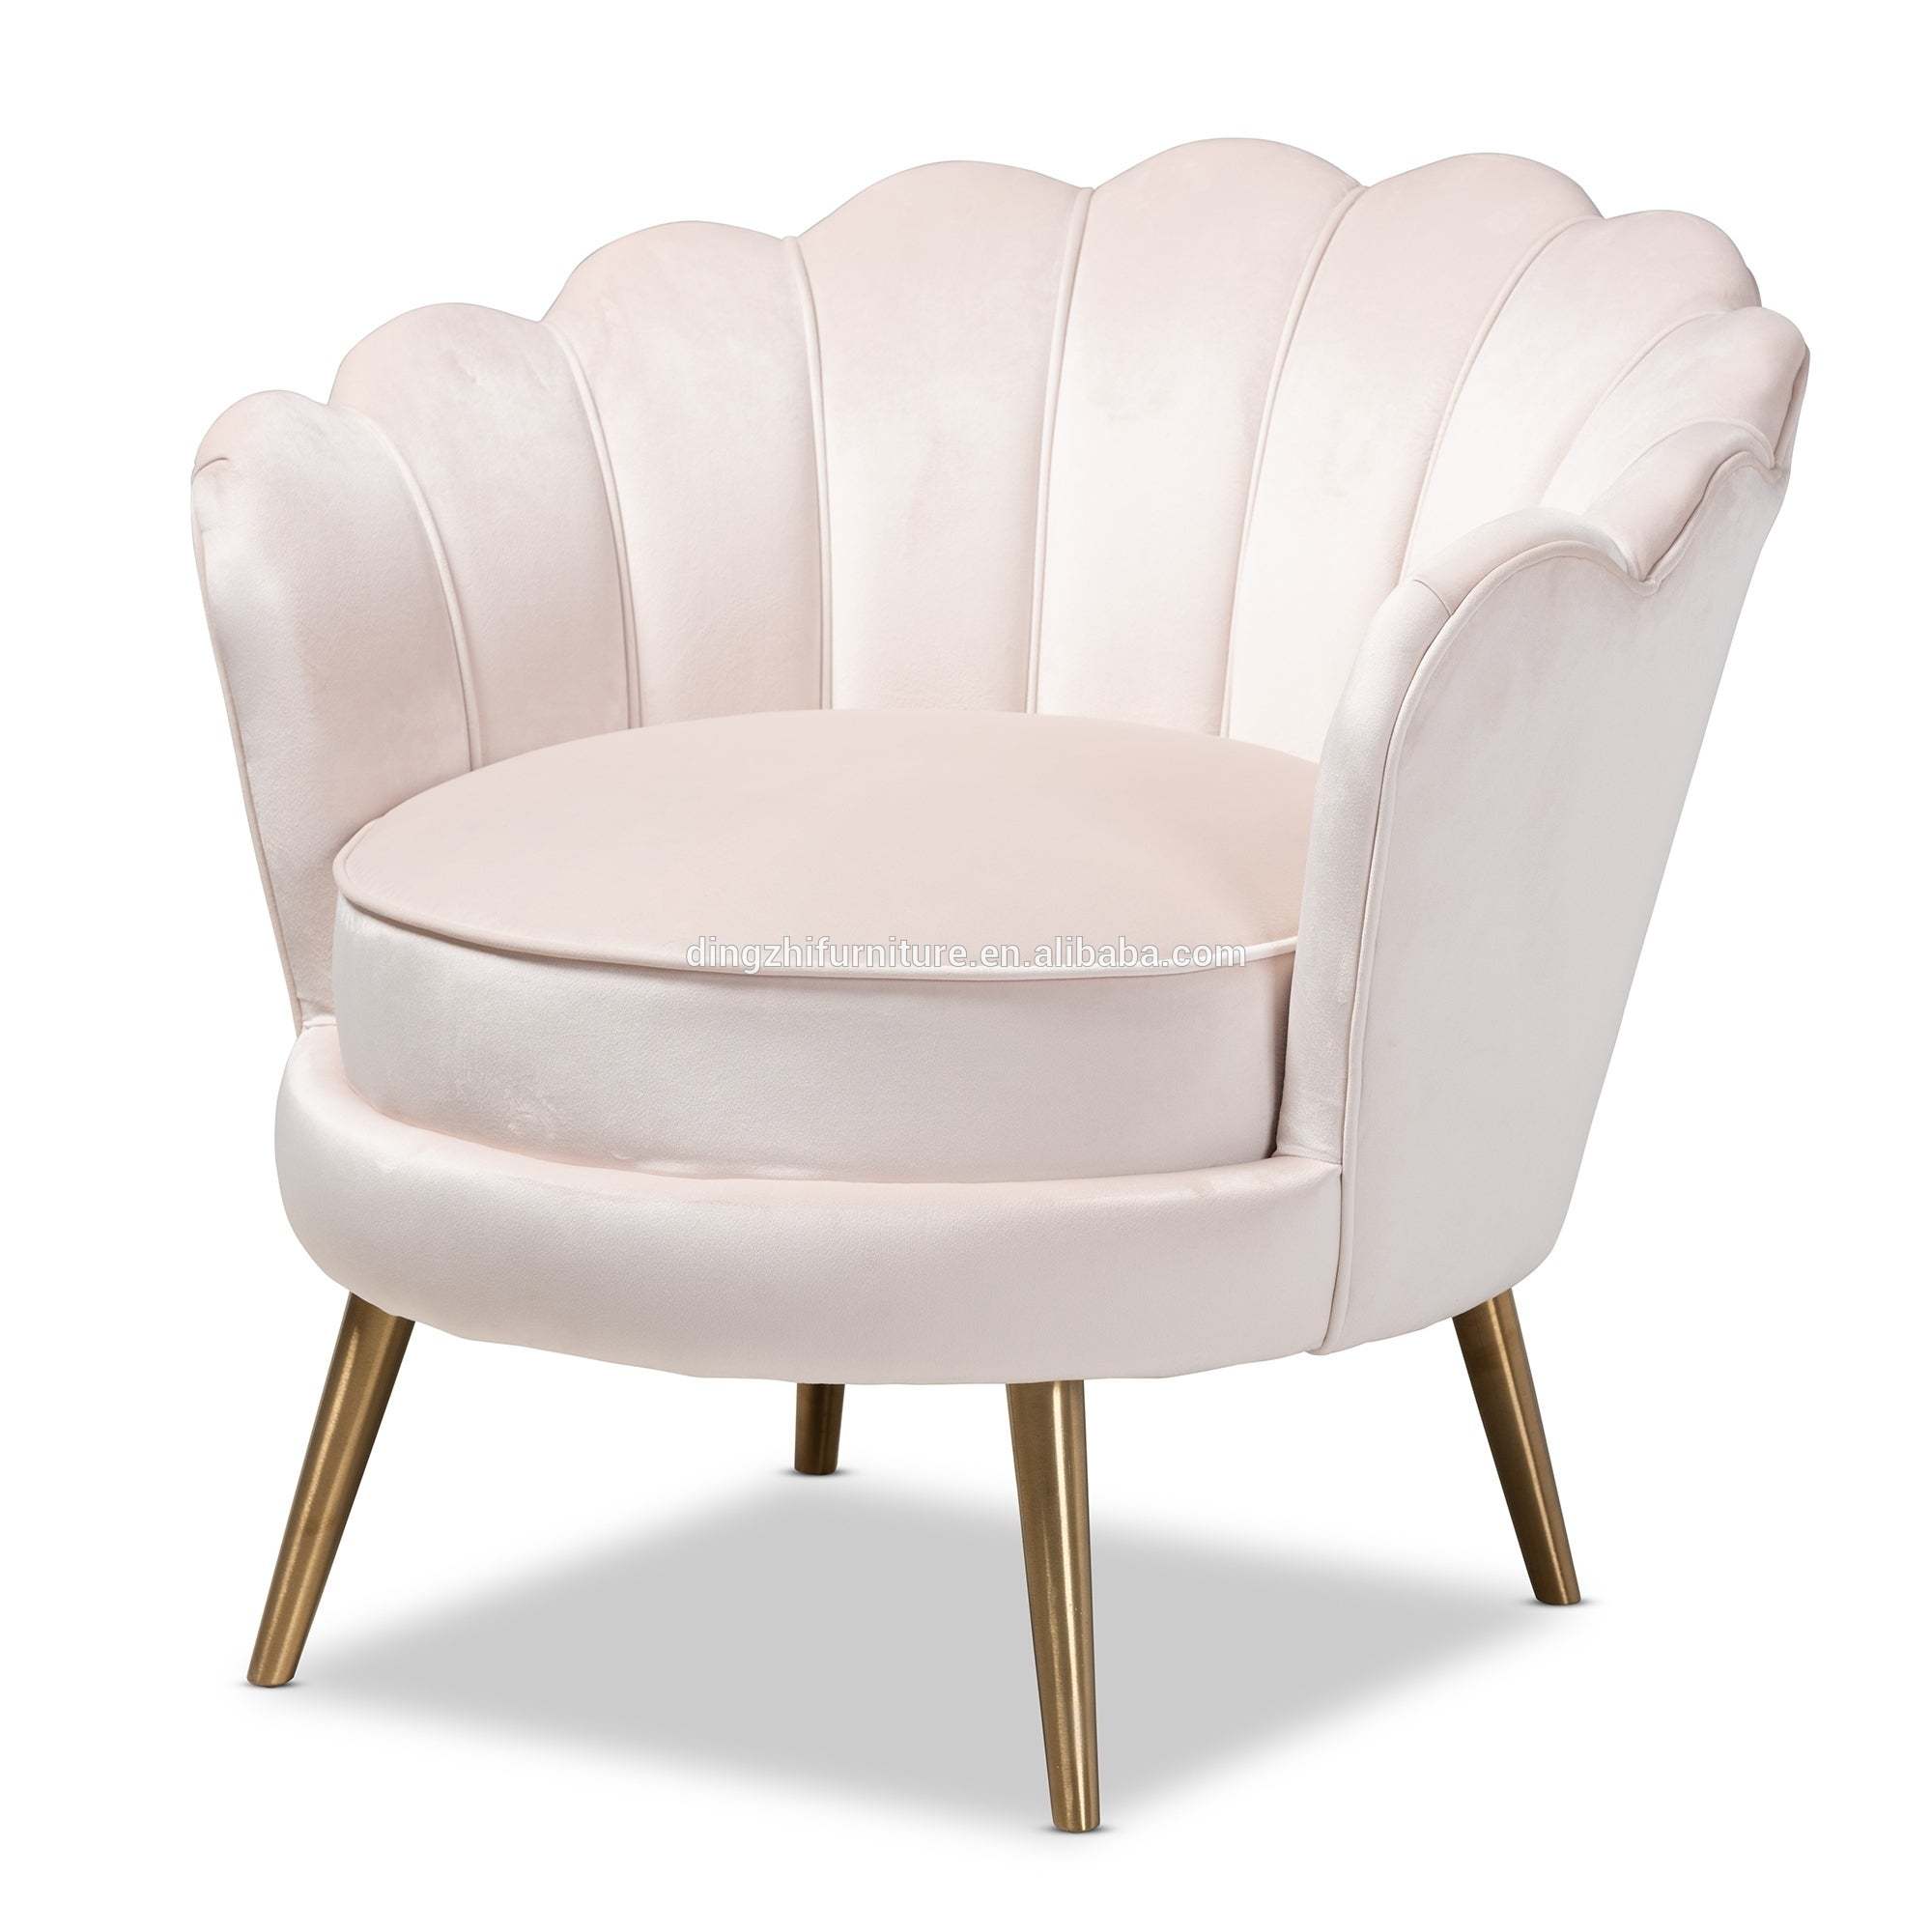 Kingbird Furniture Company 30pcs 30pcs Small Chaise Sofa 18